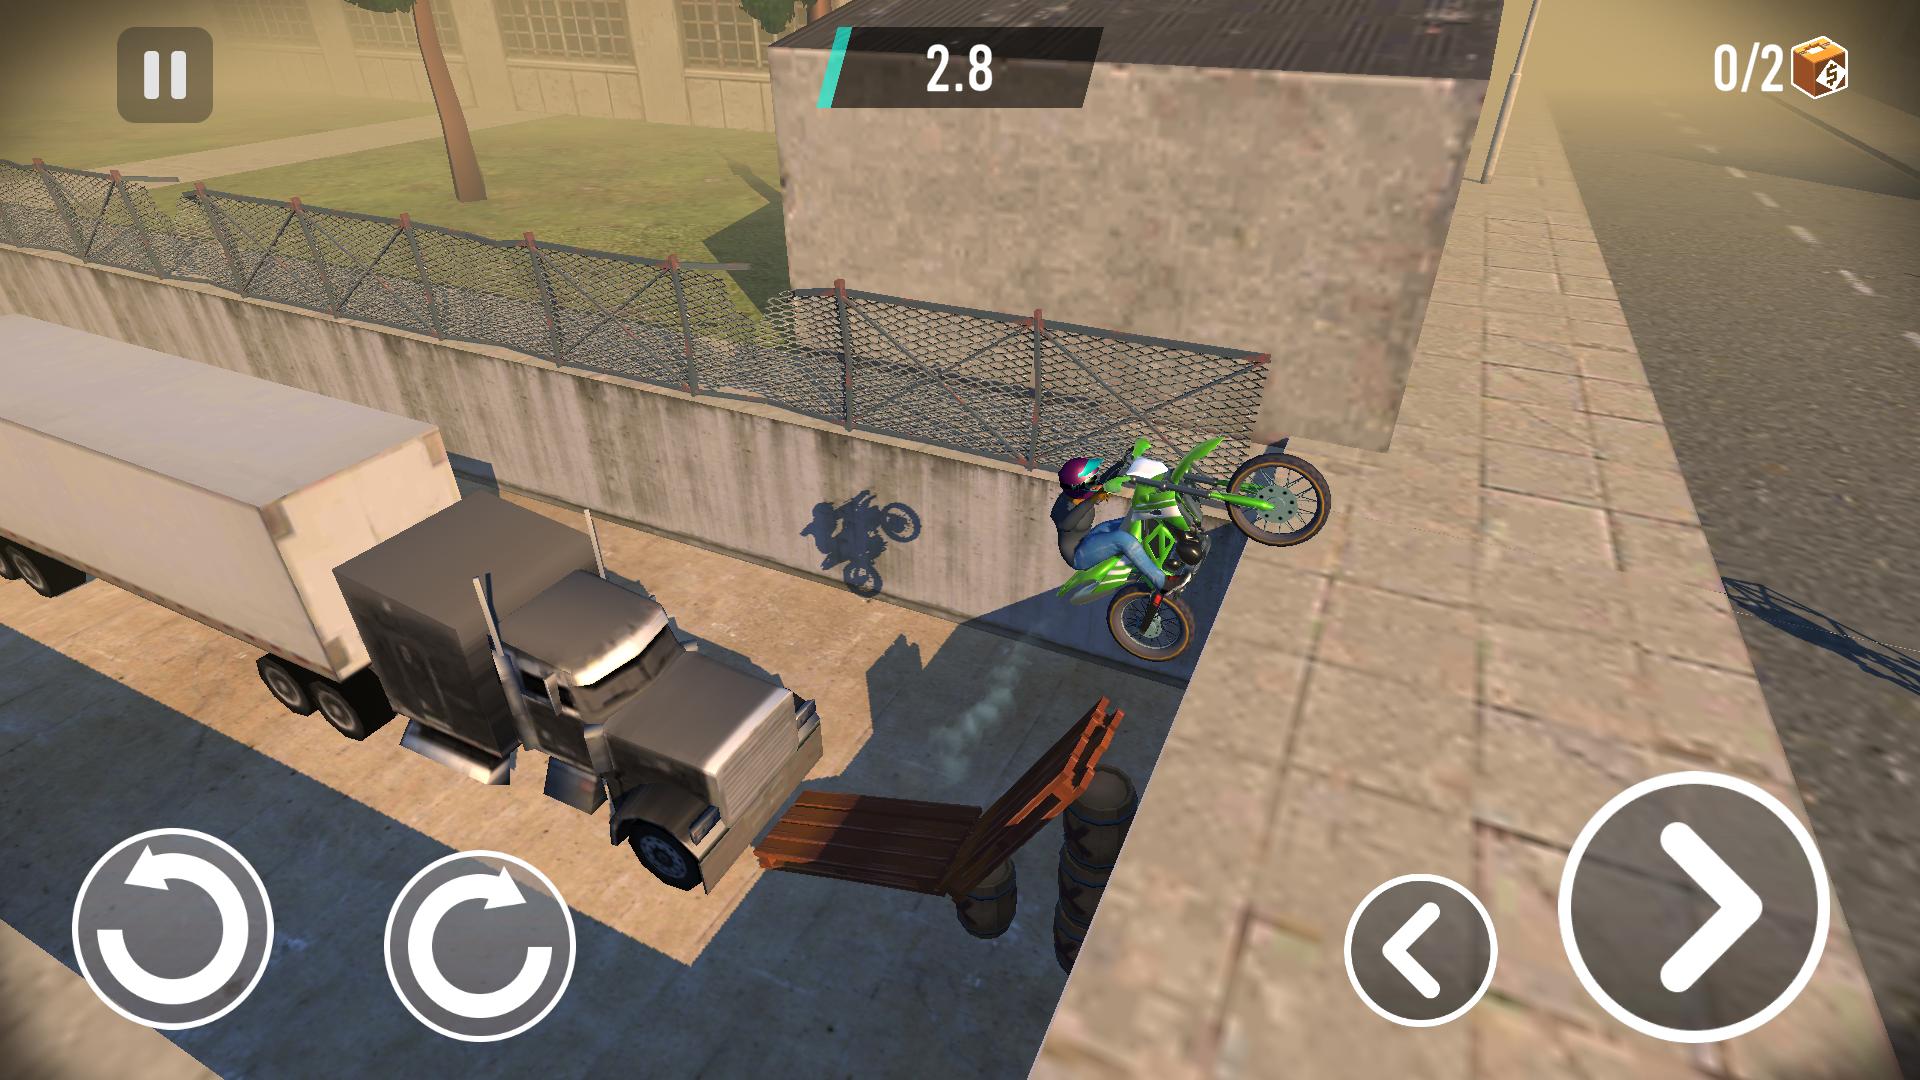 Stunt Bike Extreme - Android game screenshots.